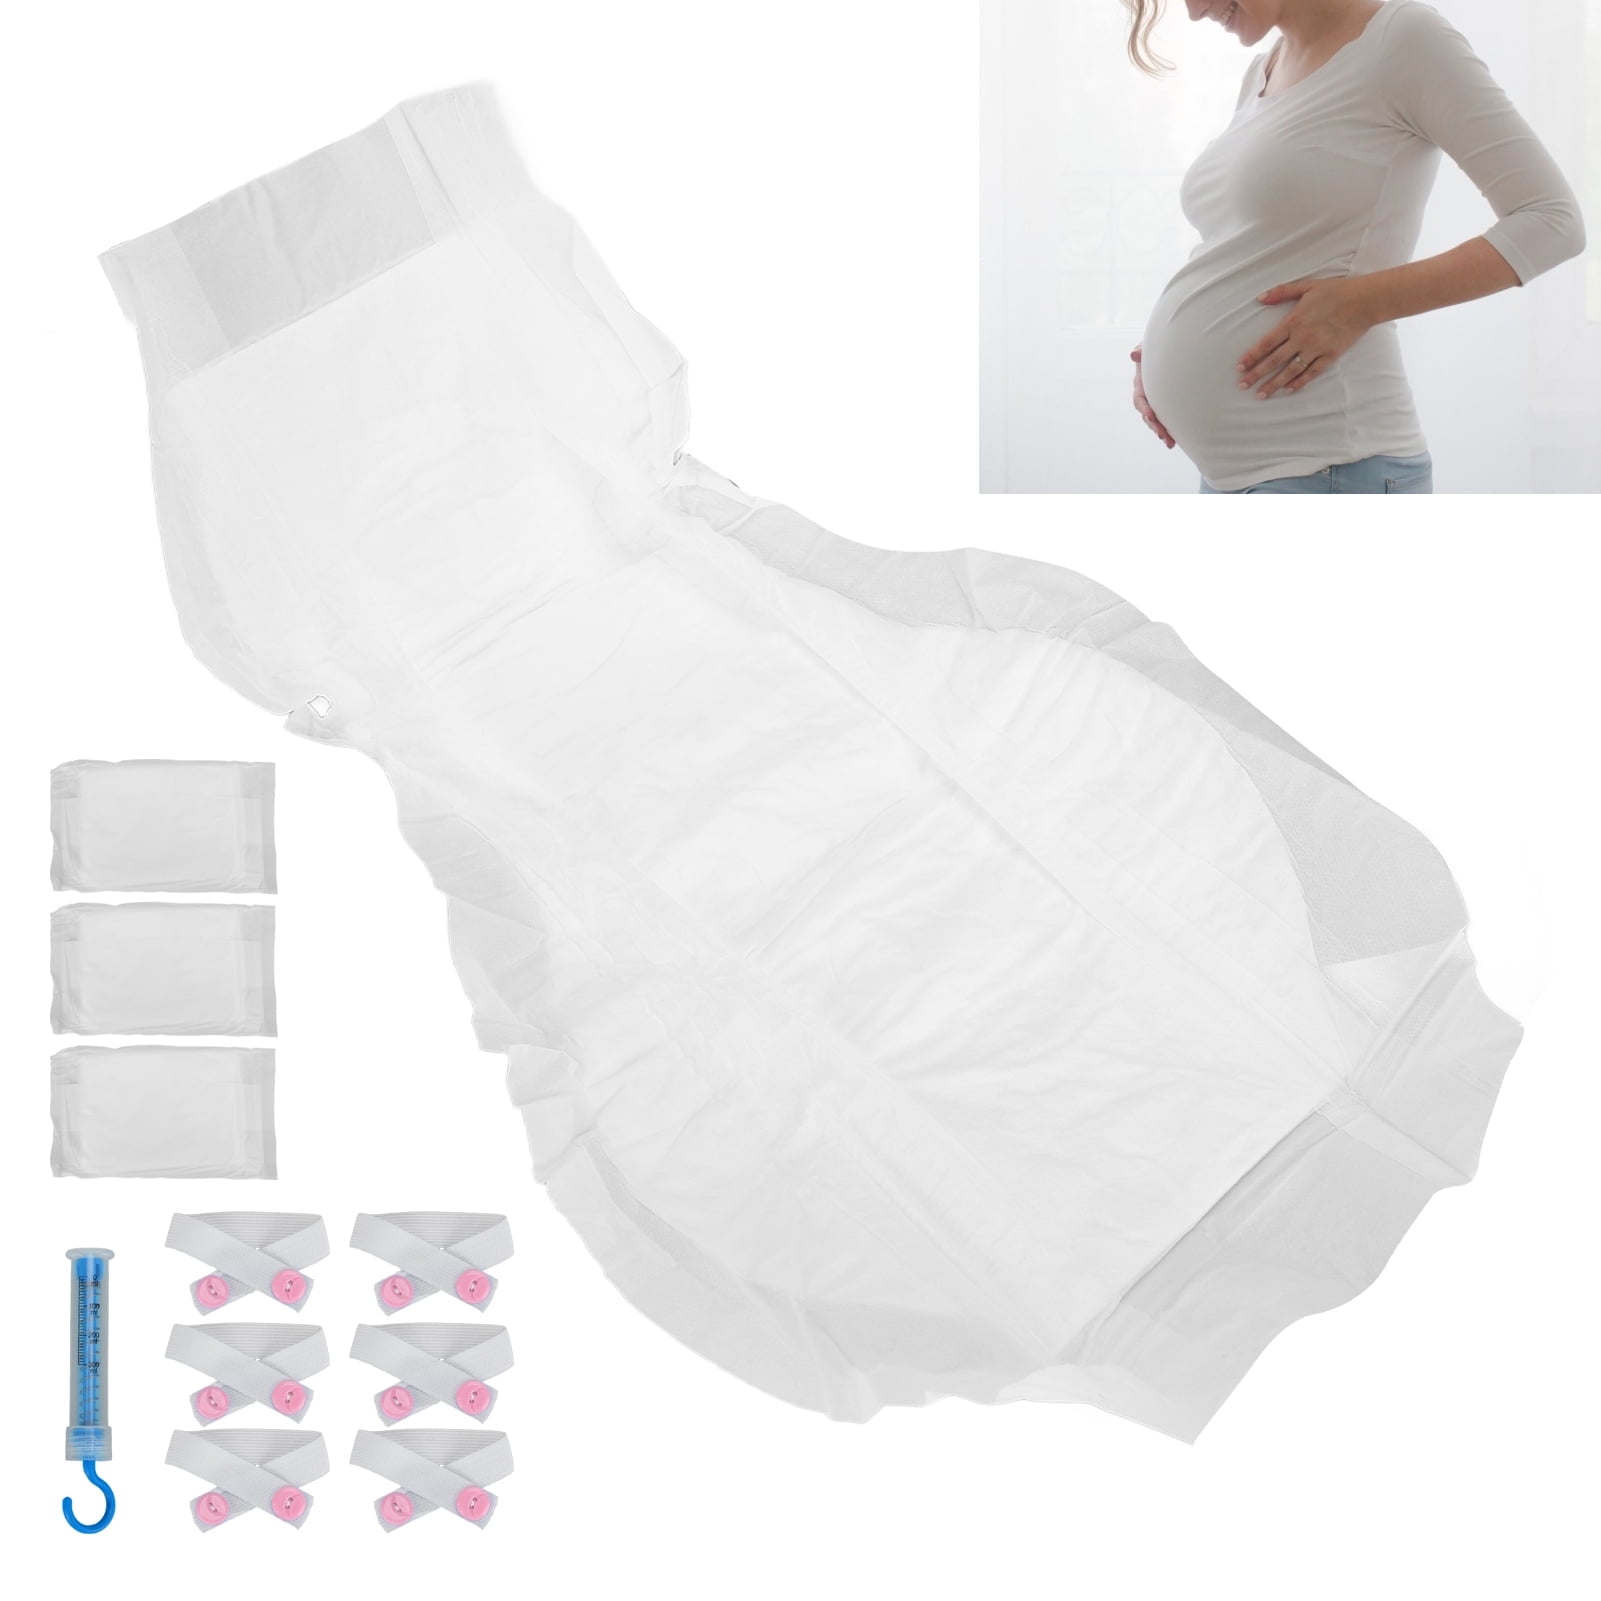 Fugacal Super Absorbency Maternity Pads,Postpartum Sanitary Napkin